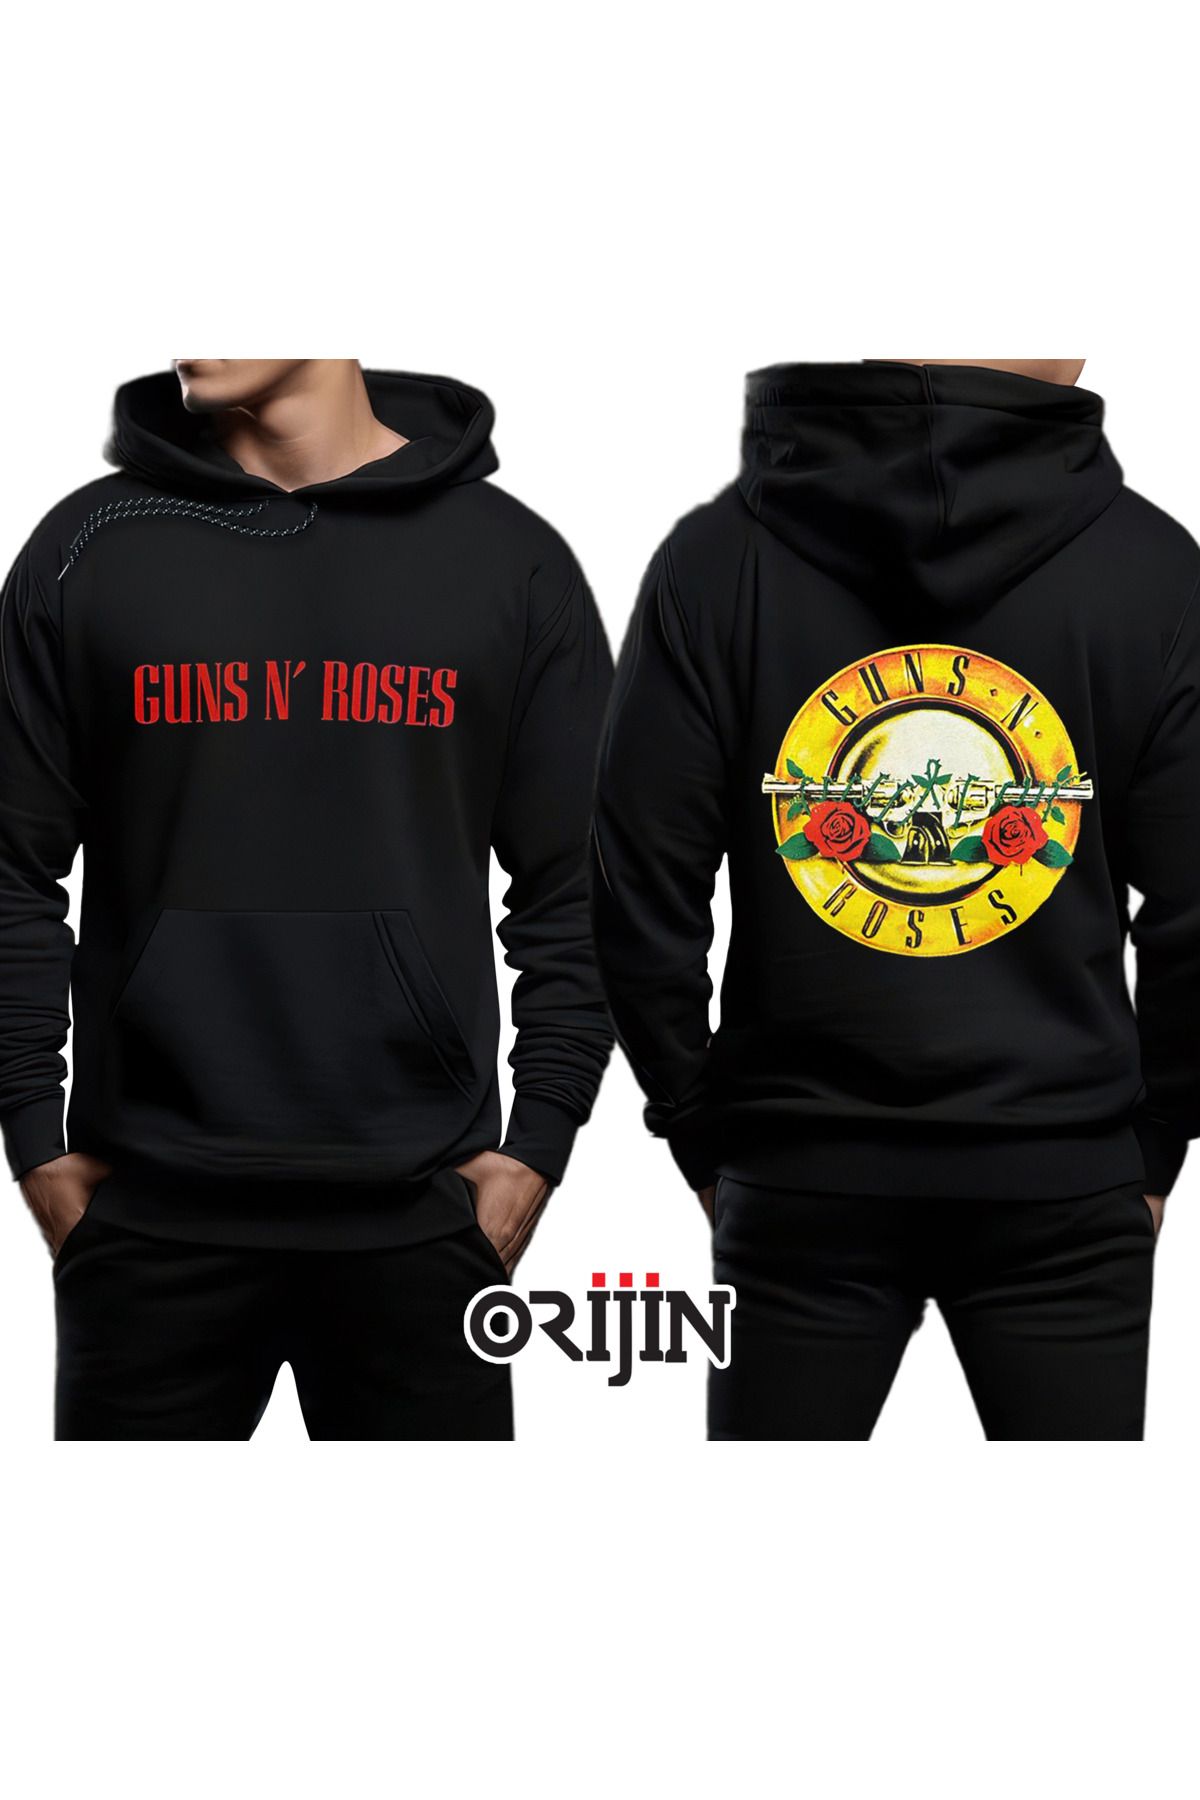 Orijin Tekstil Guns N Roses Ön Arka Baskılı Siyah Kapşonlu Sweatshirt